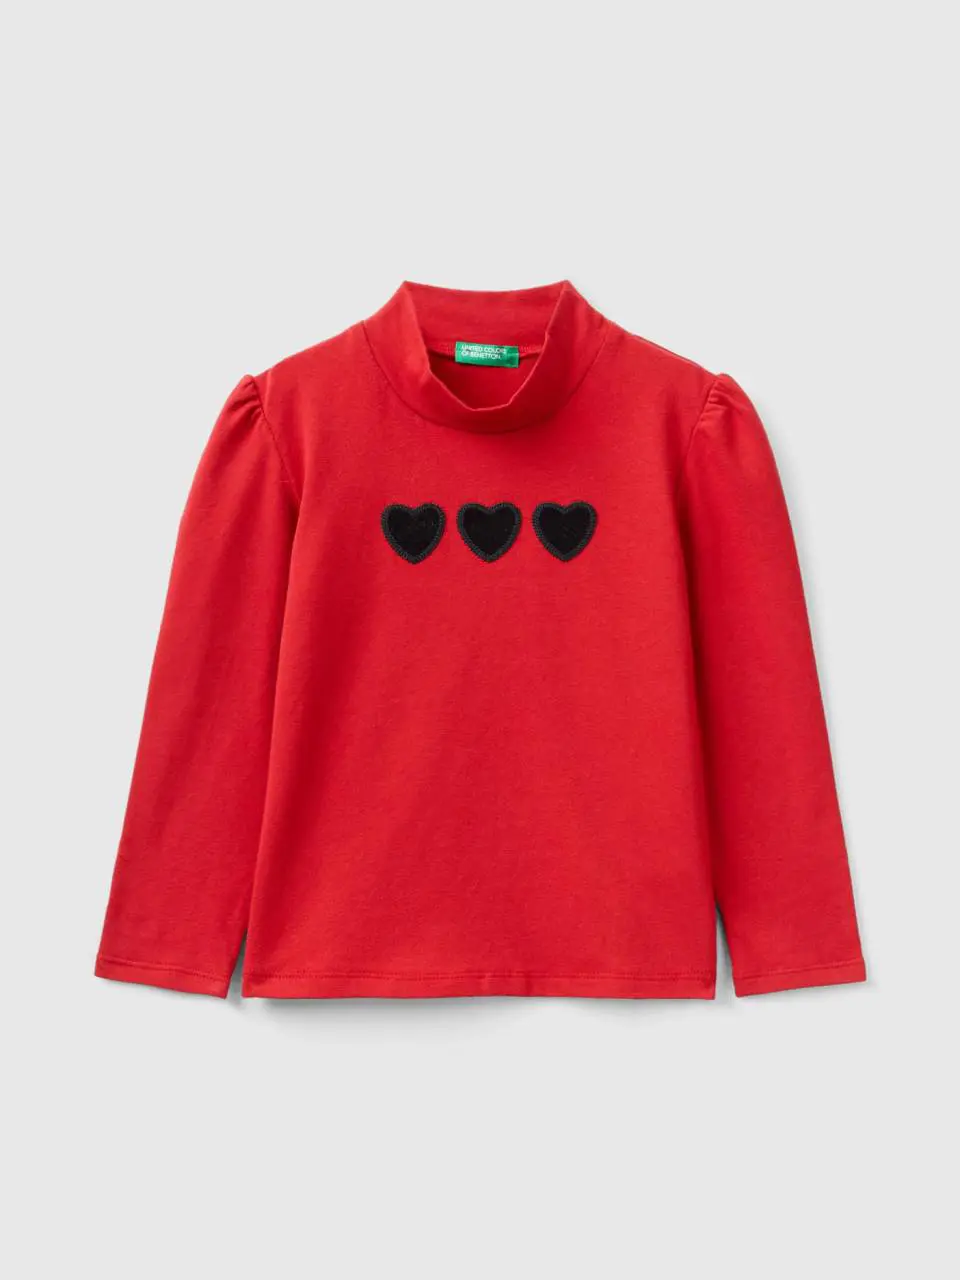 Benetton t-shirt with velvet heart patch. 1